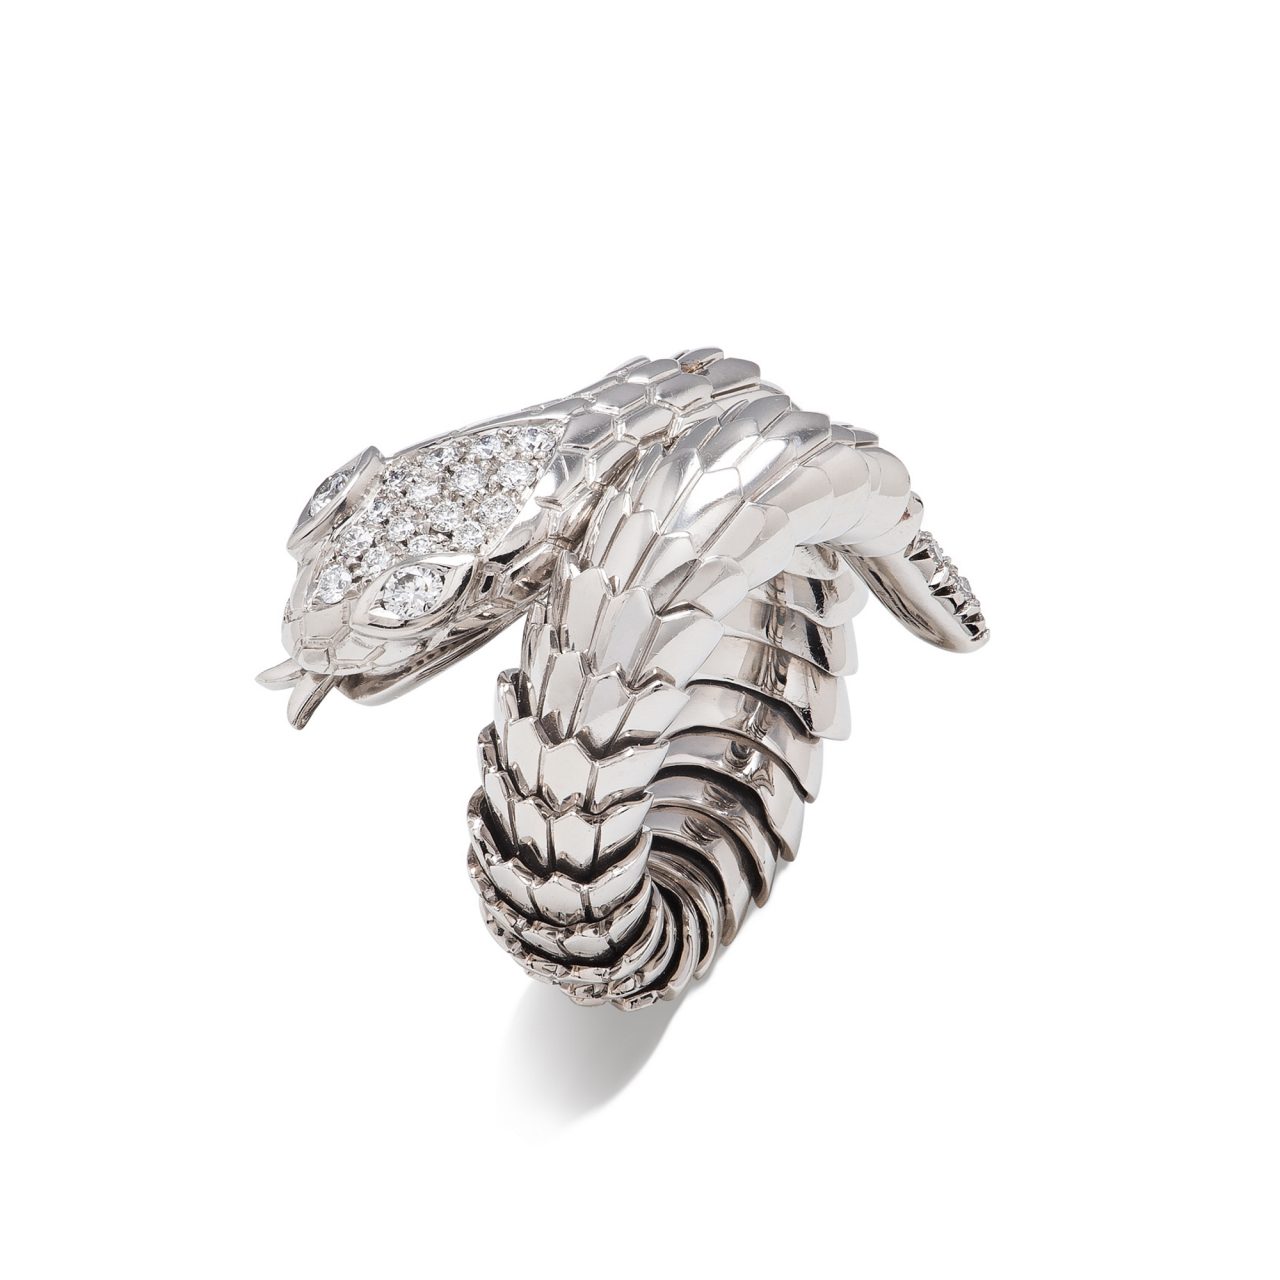 Illario's snake ring in 18k white gold and diamonds